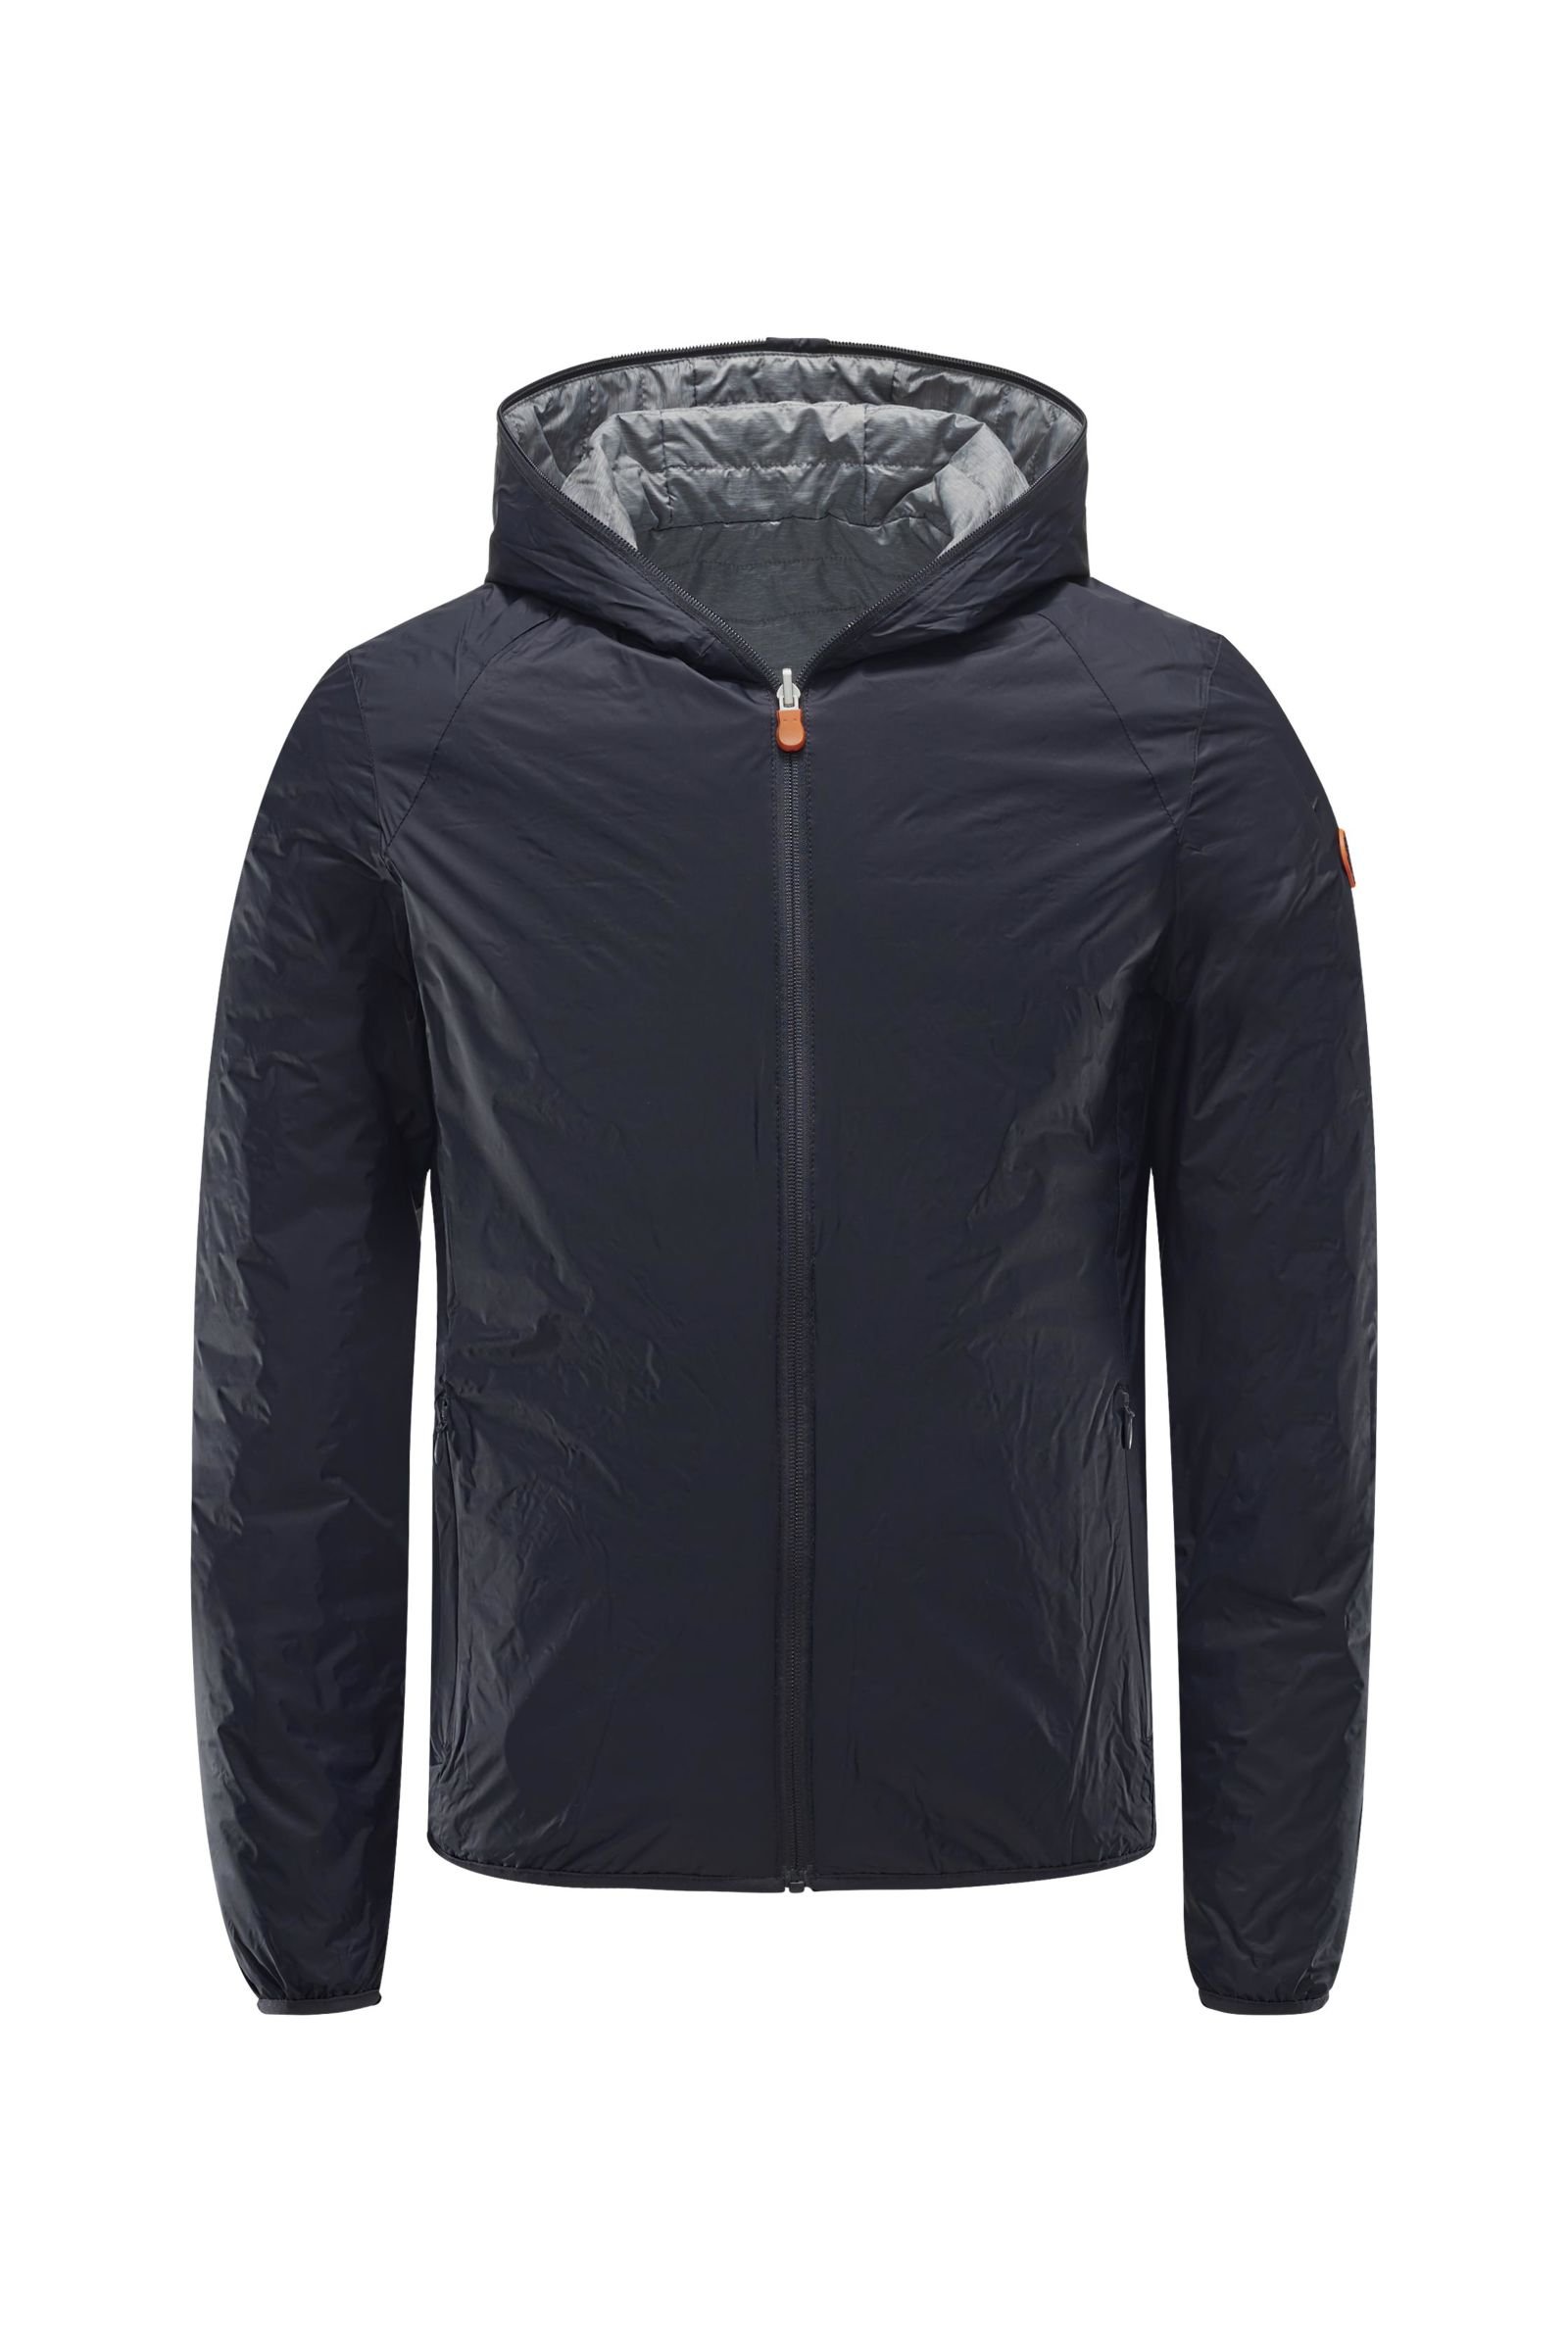 Reversible quilted jacket dark navy/grey